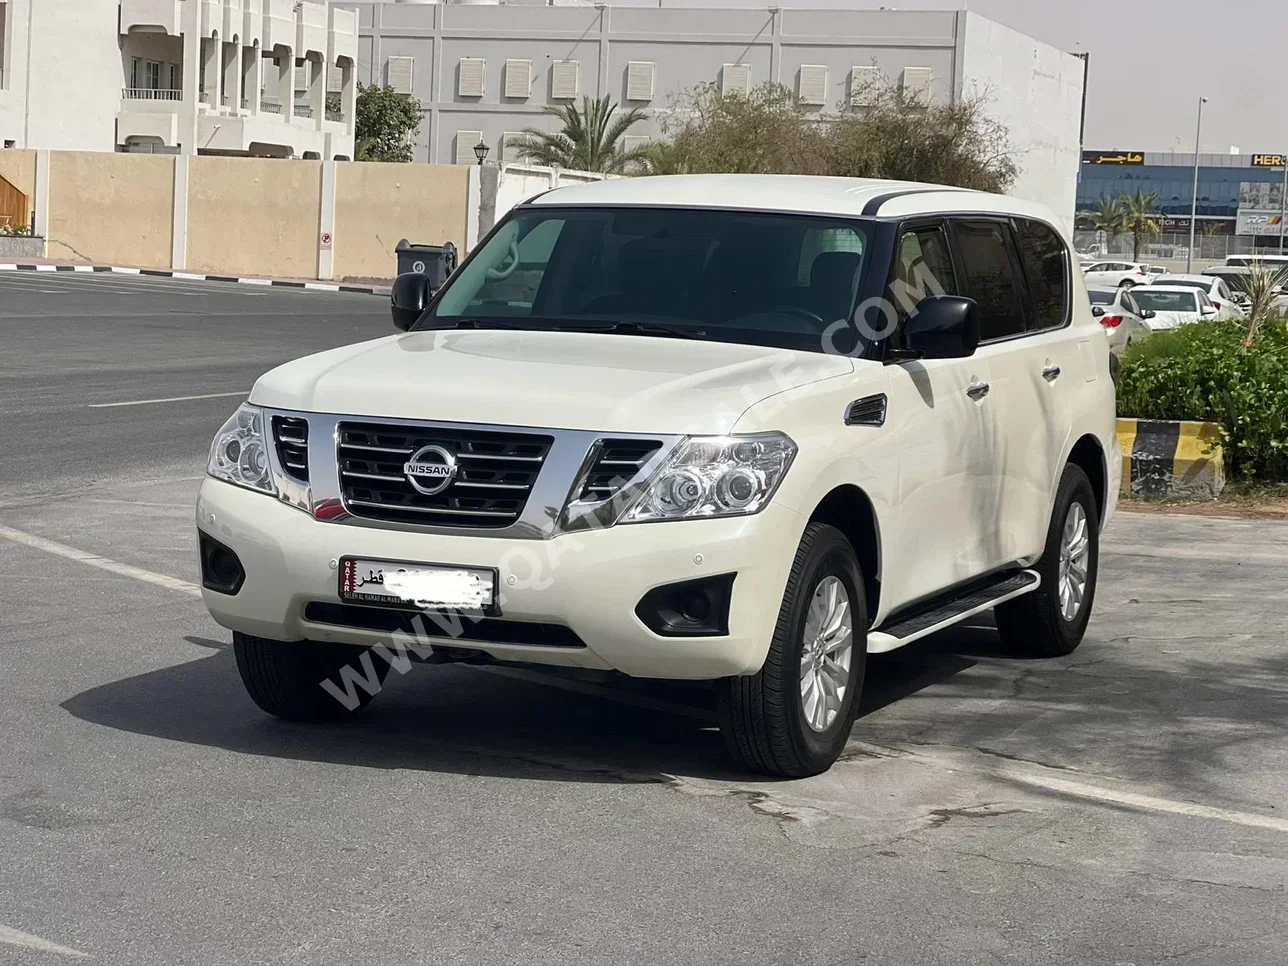 Nissan  Patrol  SE  2019  Automatic  140,000 Km  8 Cylinder  Four Wheel Drive (4WD)  SUV  White